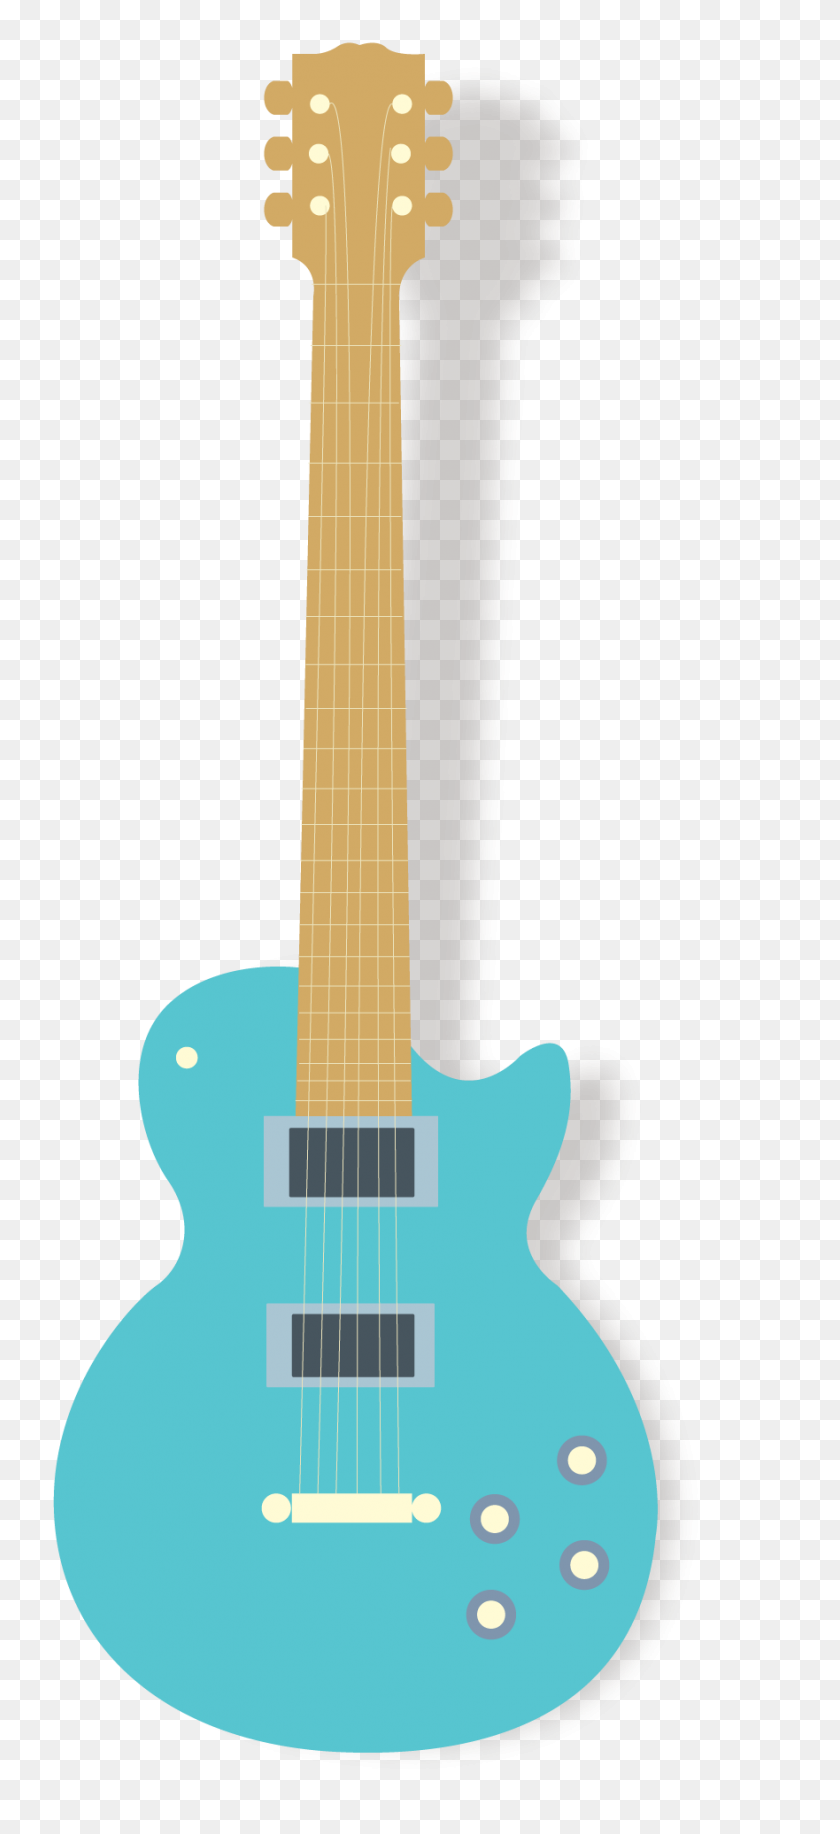 881x2004 Guitar Clipart Teal - Guitar Clip Art Free